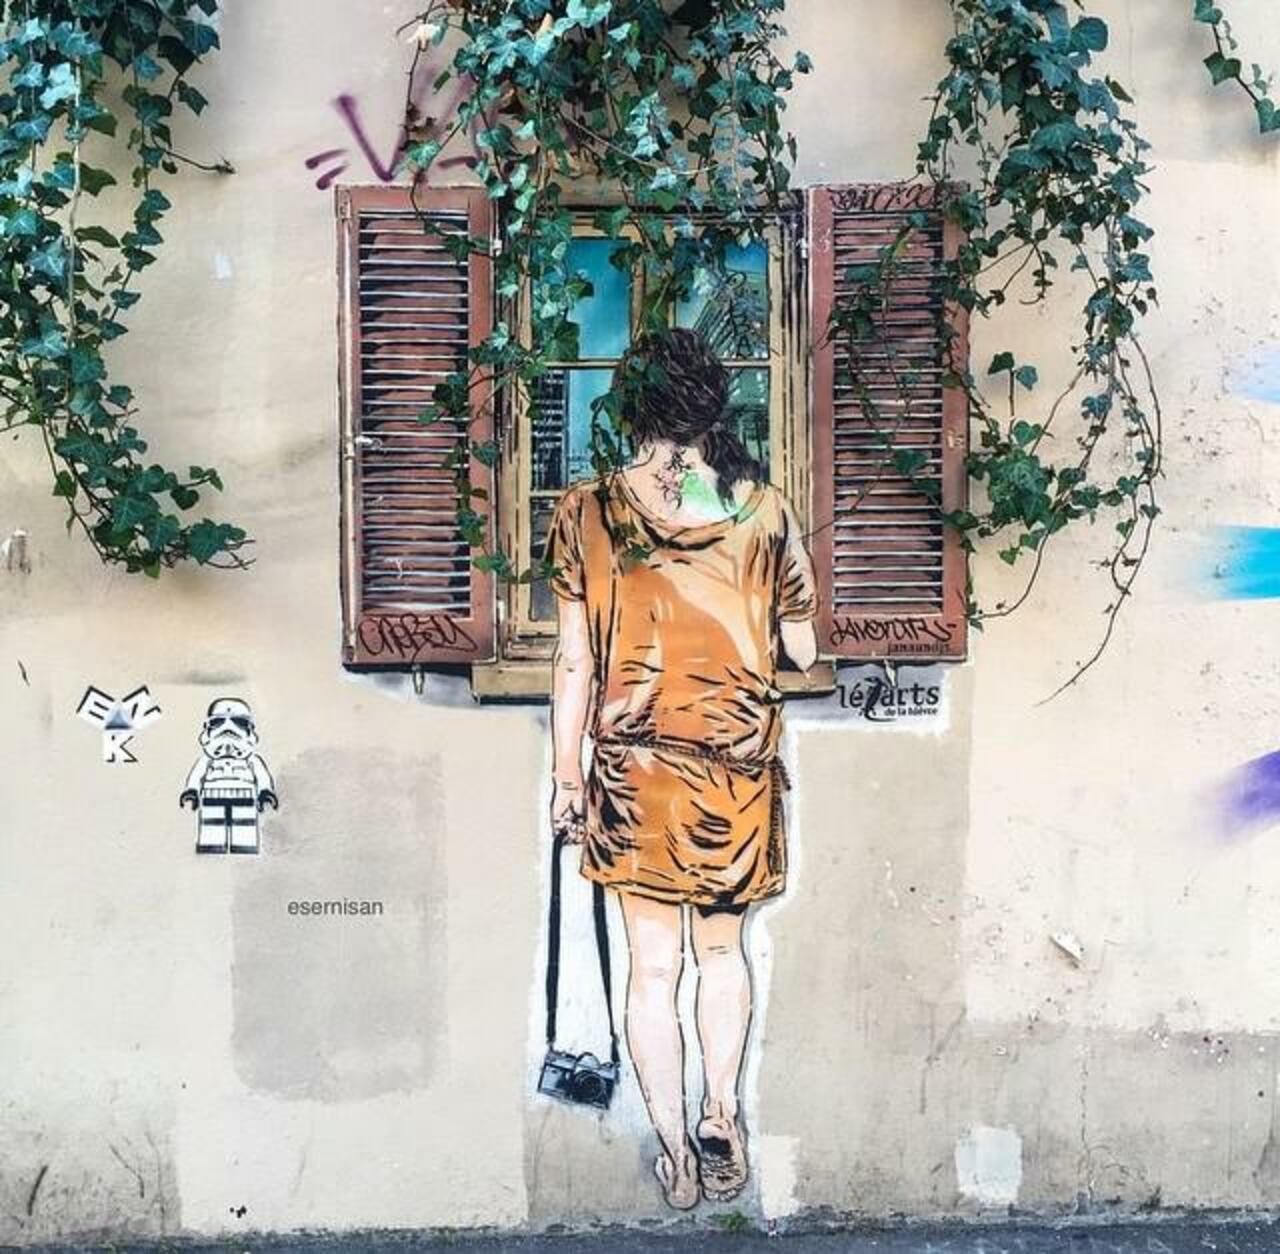 "@GoogleStreetArt: Street Art in Paris by Jana & Js

#art #arte #graffiti #streetart http://t.co/591StqS6As"